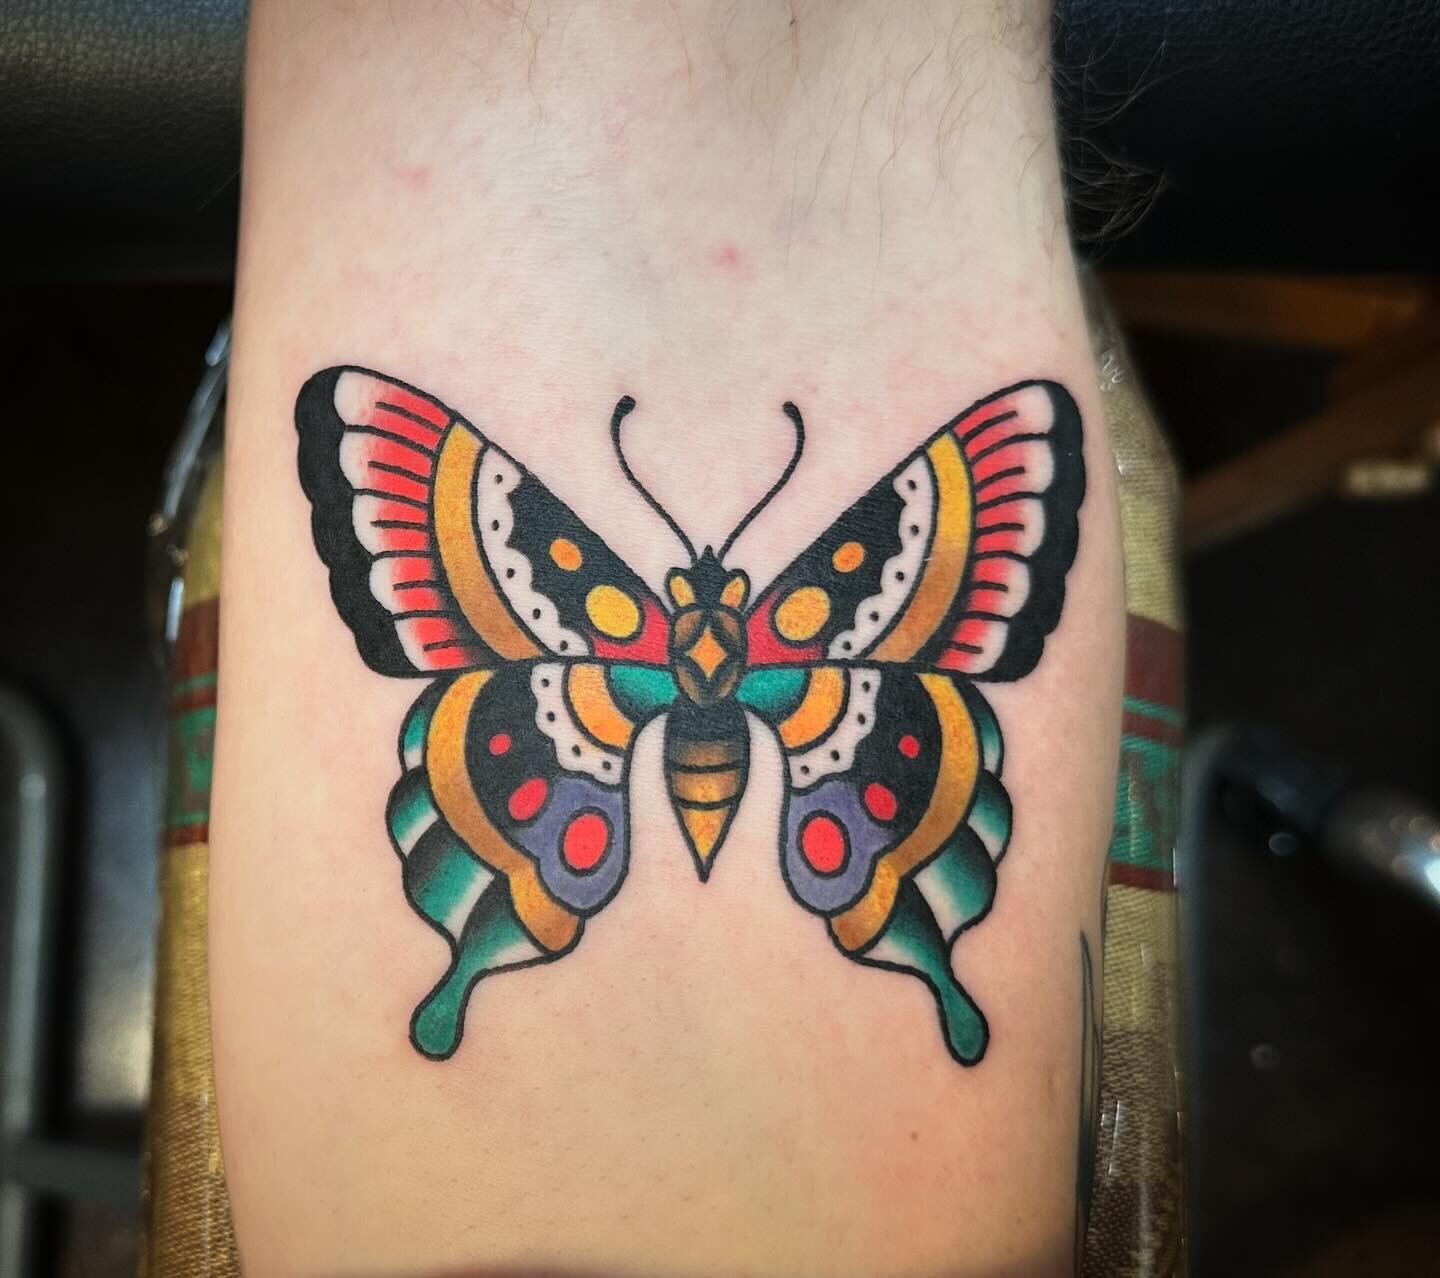 Always love tattooing butterflies! 

#okc #okctattoos #okctattooartist #keepsake #keepsaketattoo